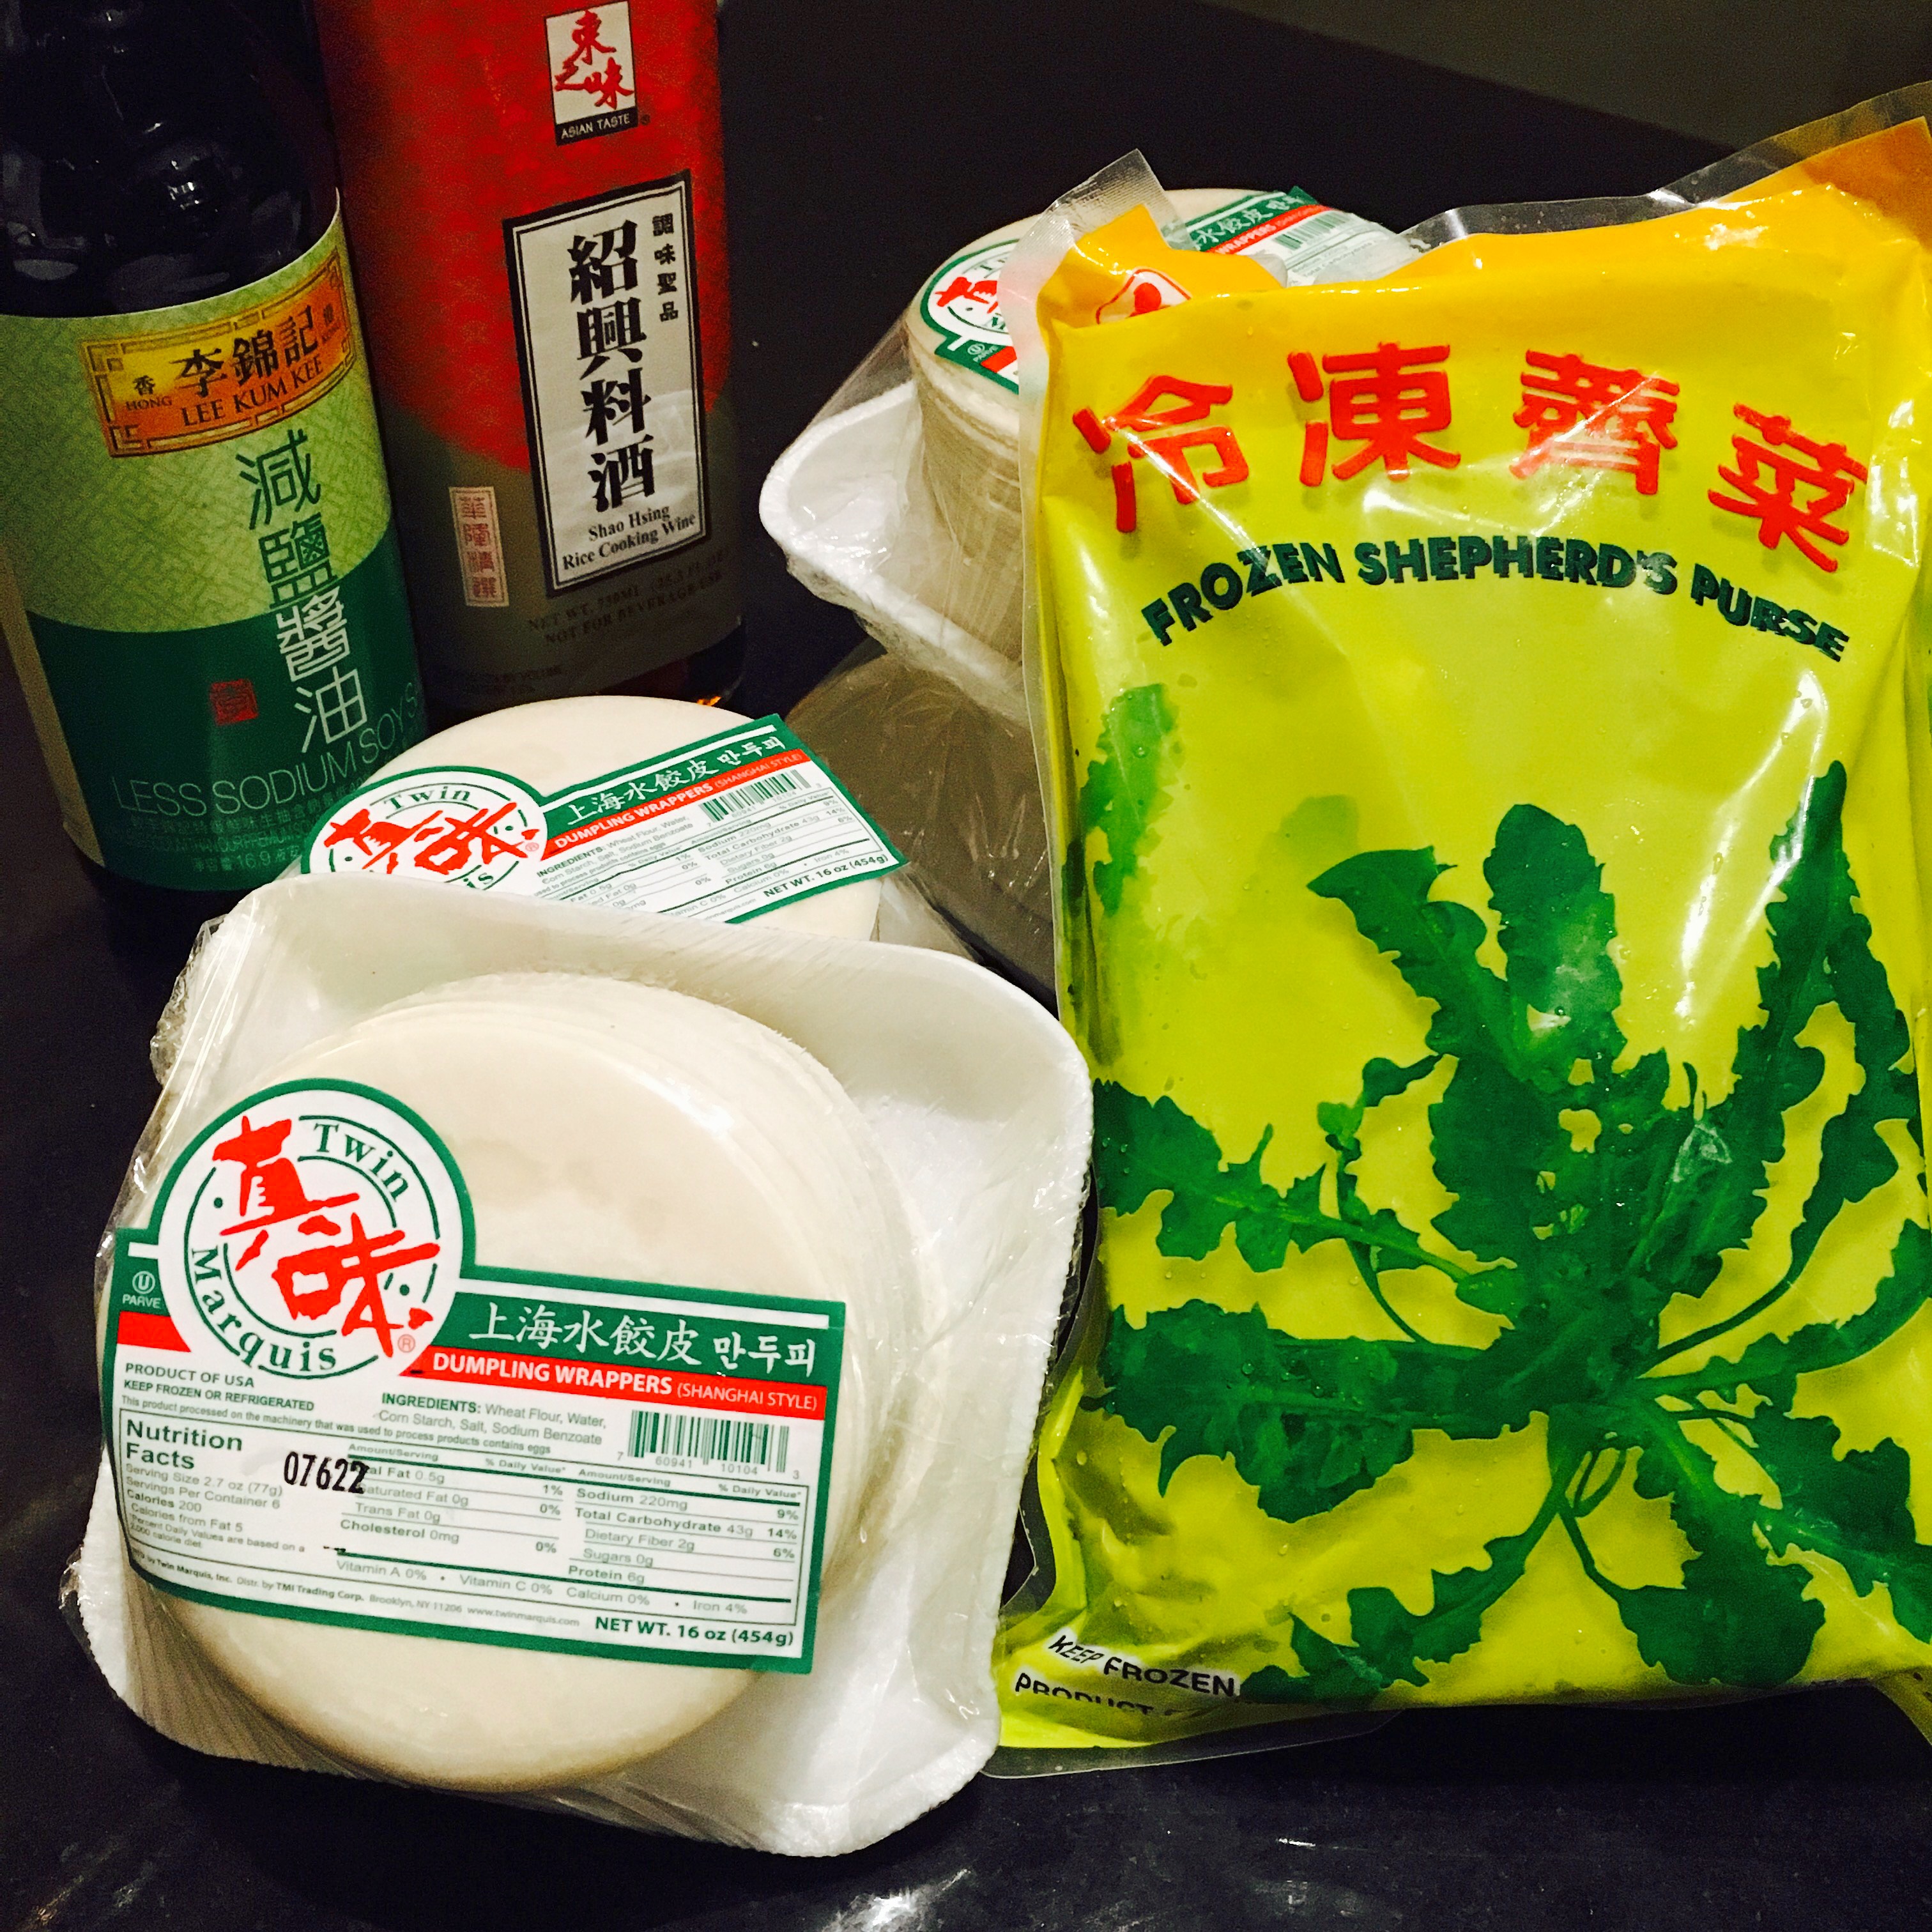 Fish fillet in Shepherd's Purse Sauce - 荠菜鱼片 - Picture of Shanghai Family  Cuisine, Milpitas - Tripadvisor